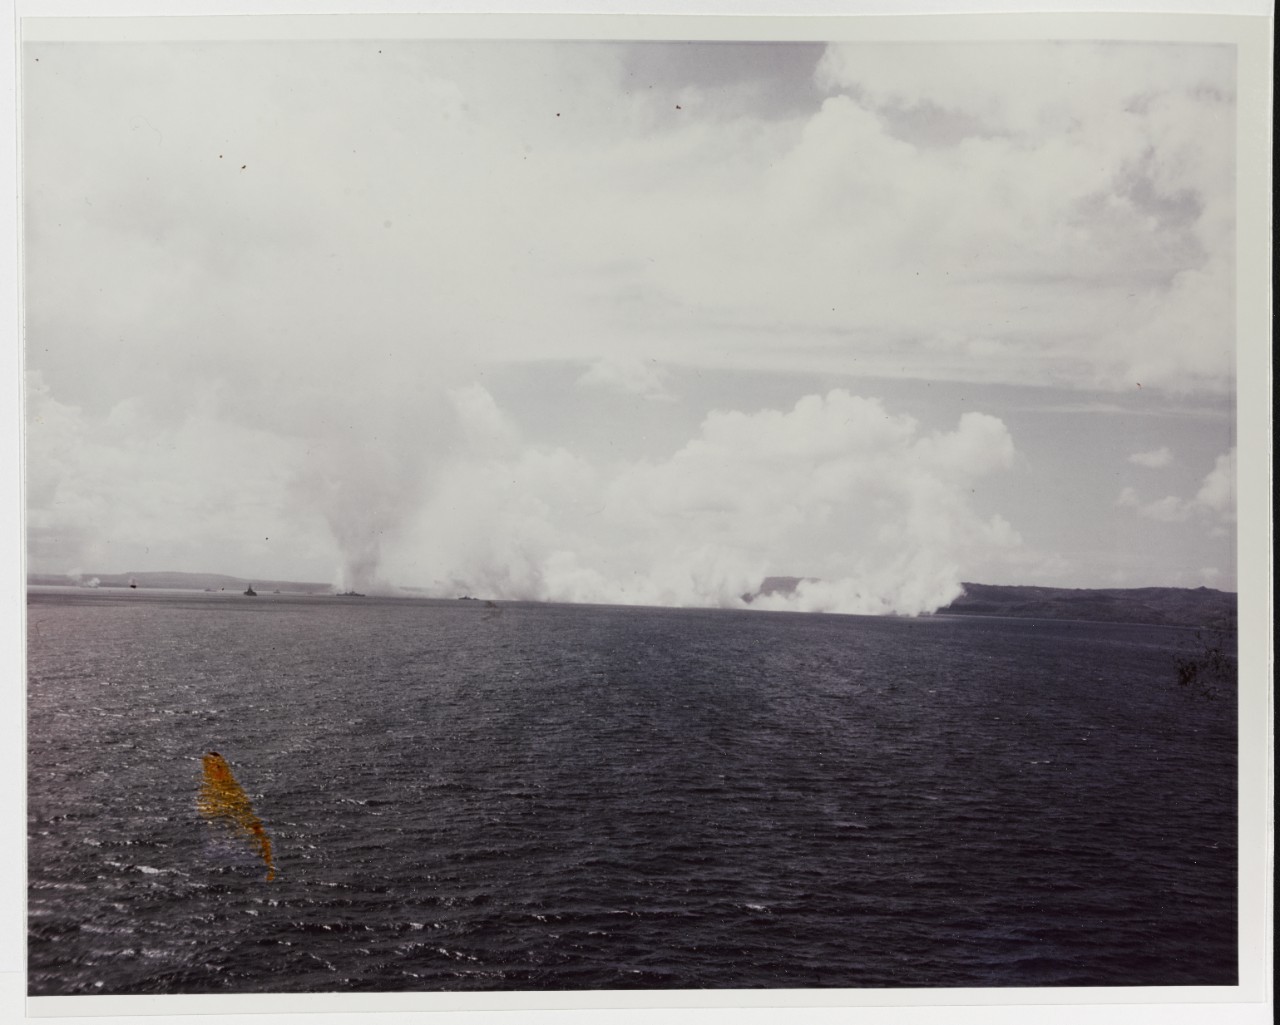 Invasion of Guam, July 1944.